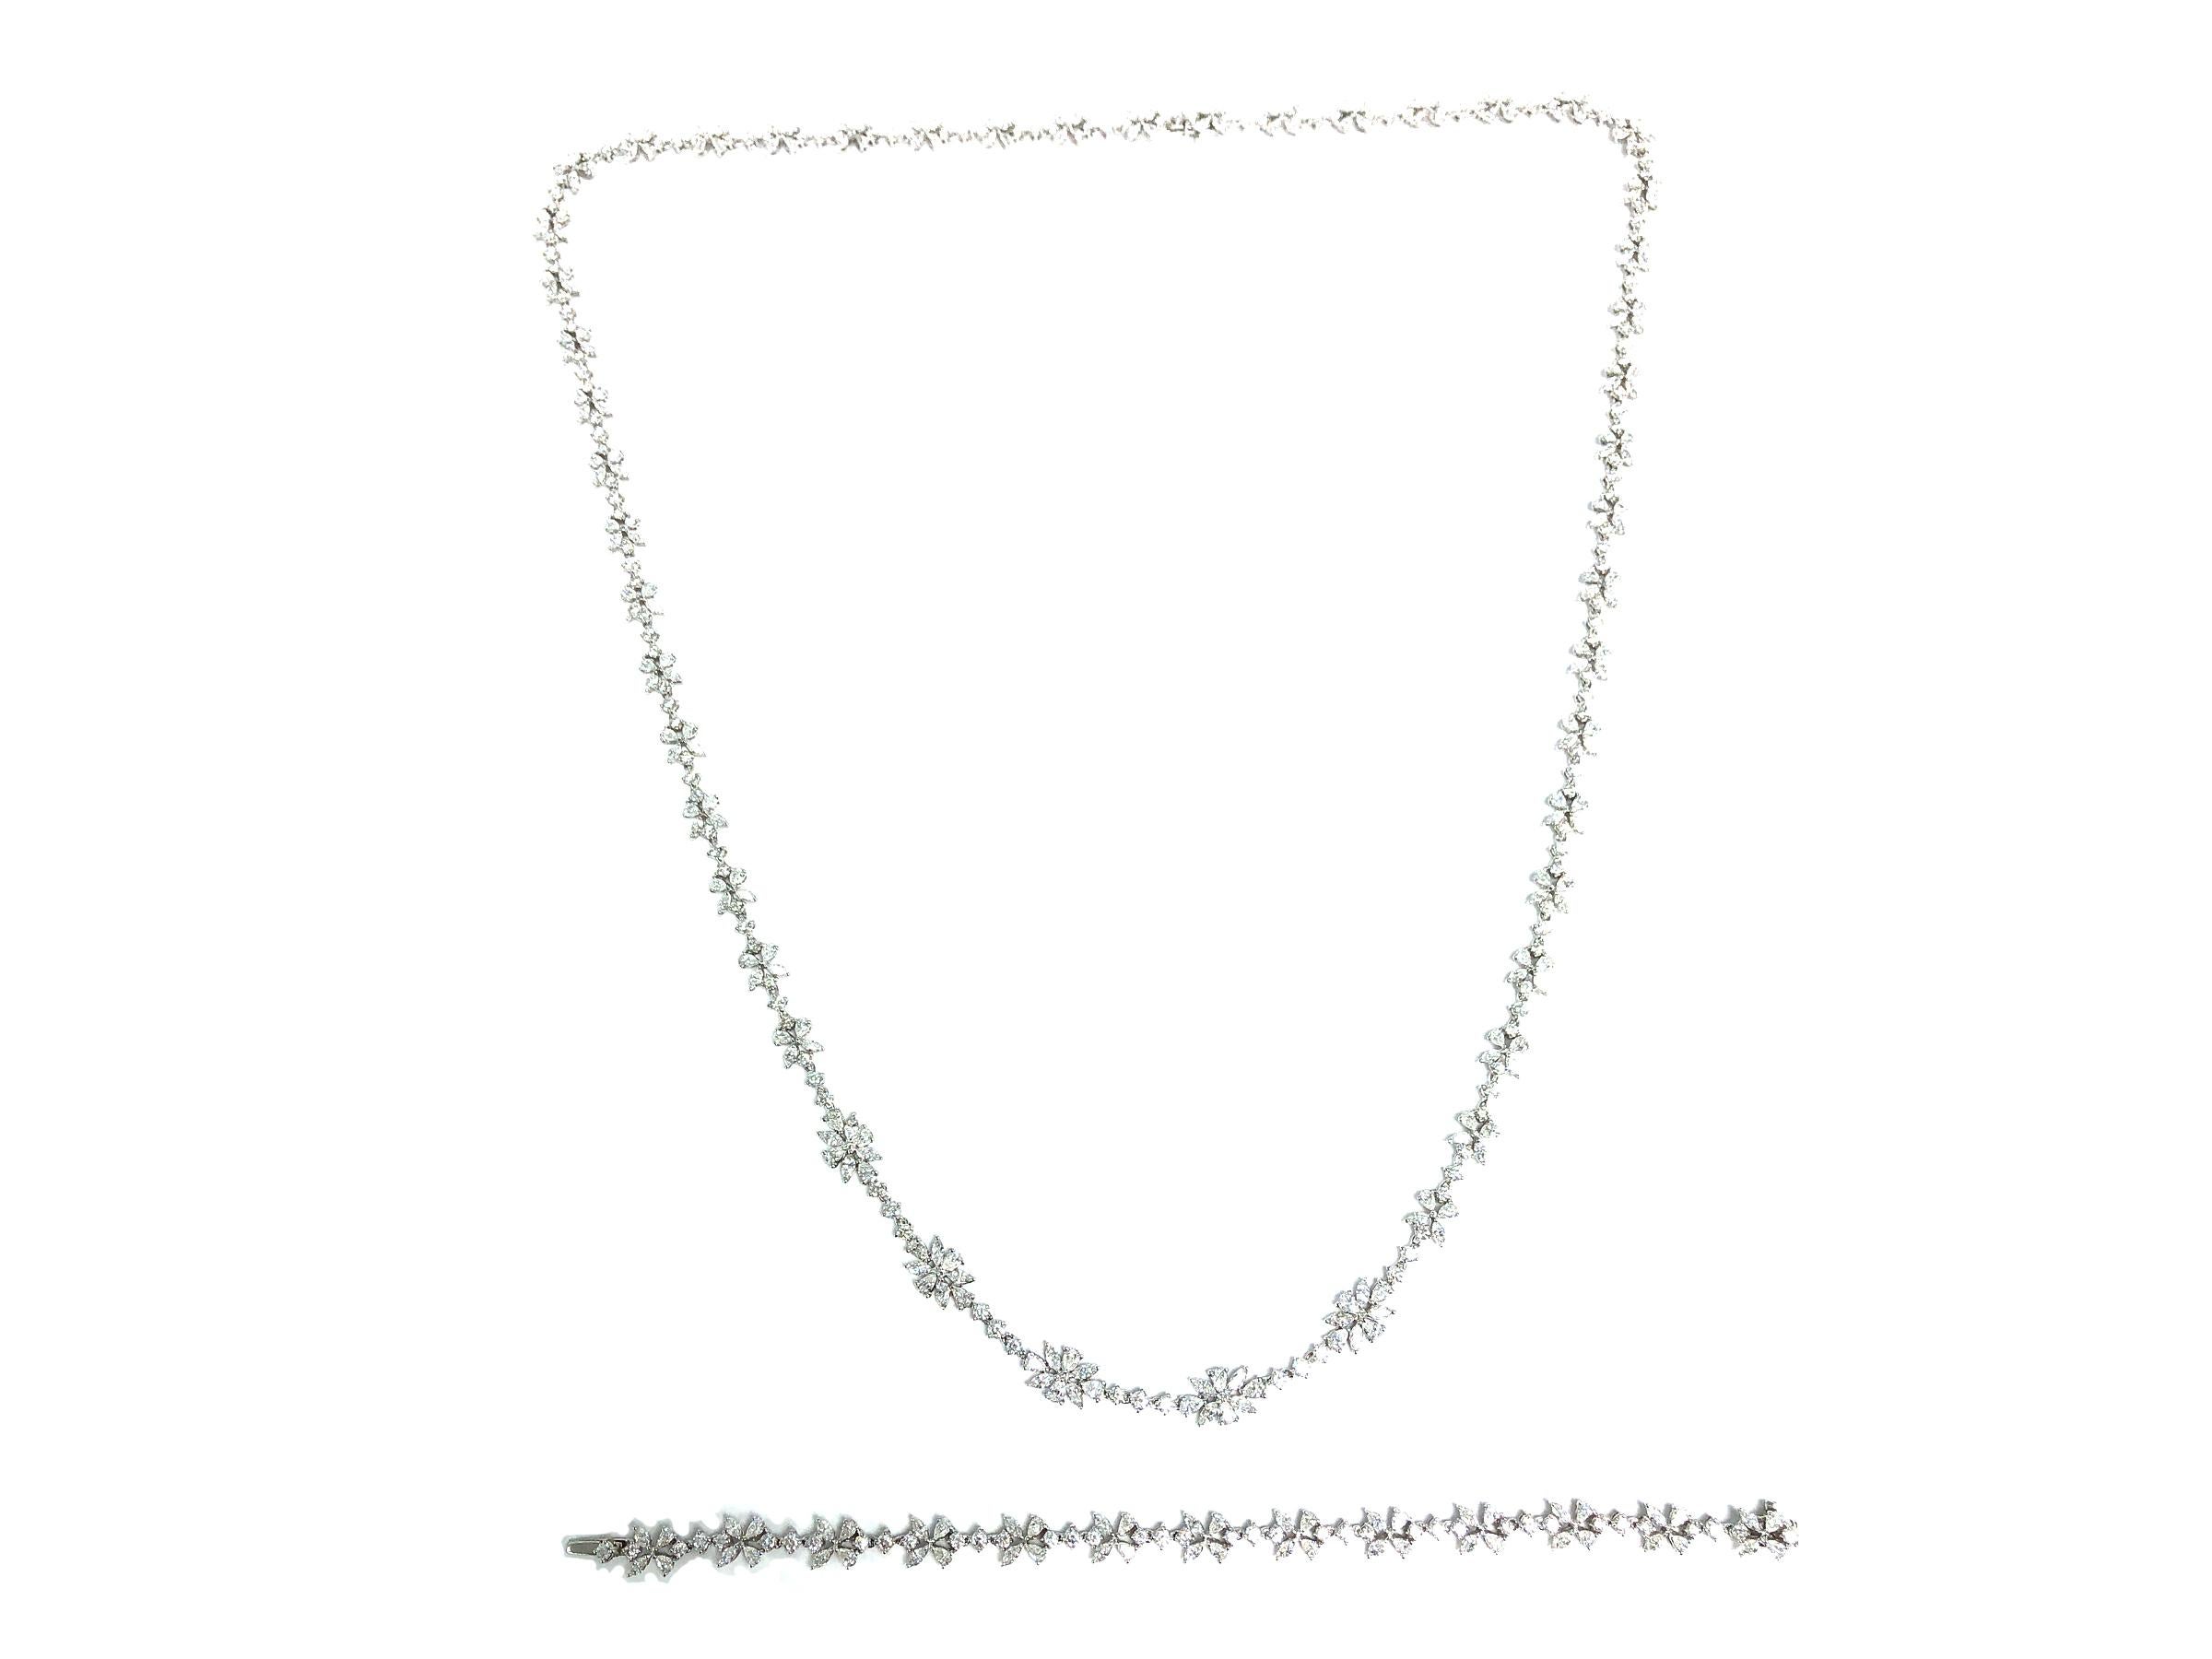 Marquise Cut 23.93 Carat Diamond Flower Necklace and Bracelet Set